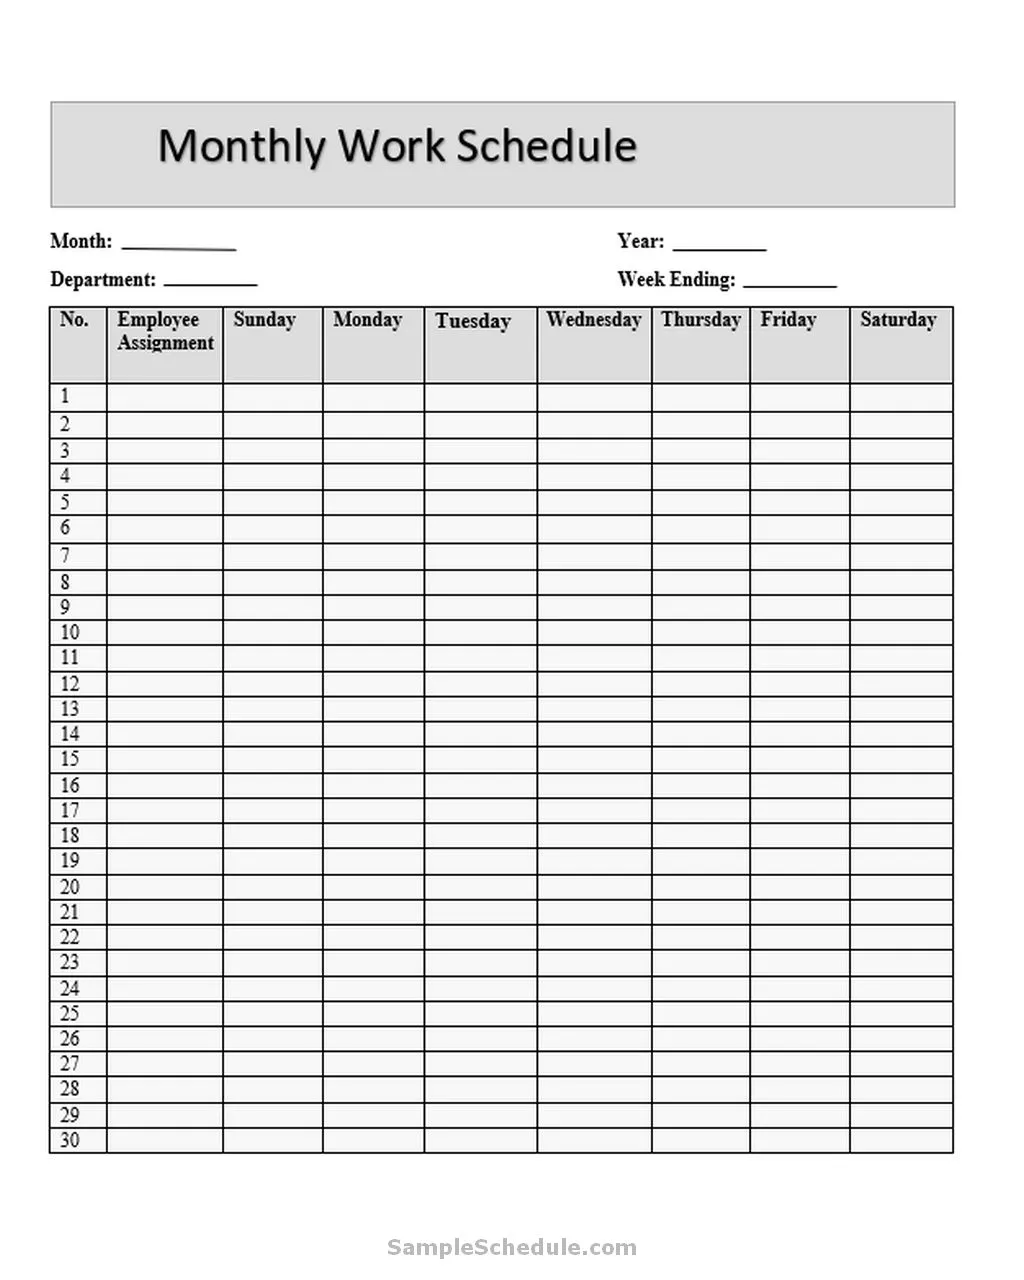 Monthly Work Schedule Template 06